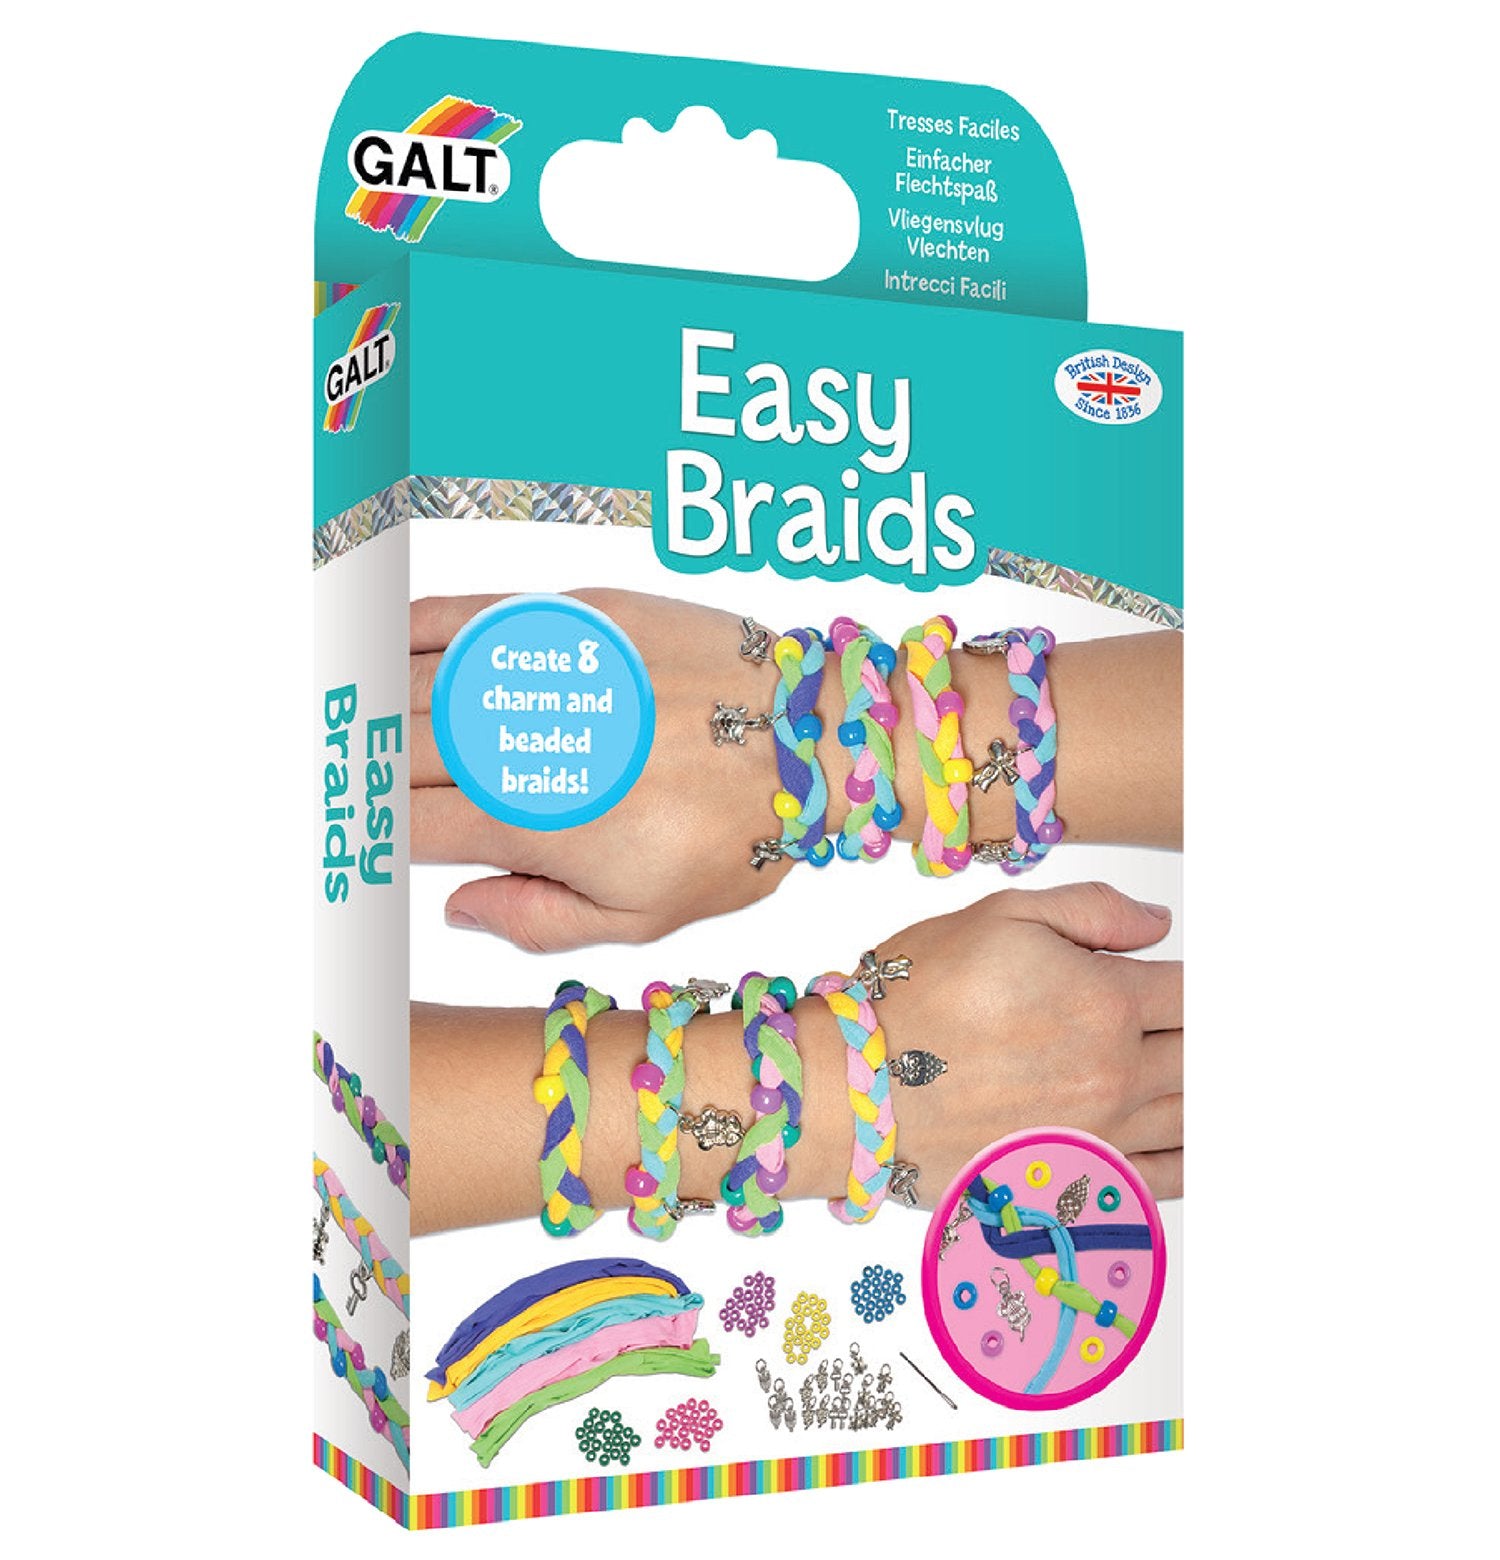 Easy Braids - Galt